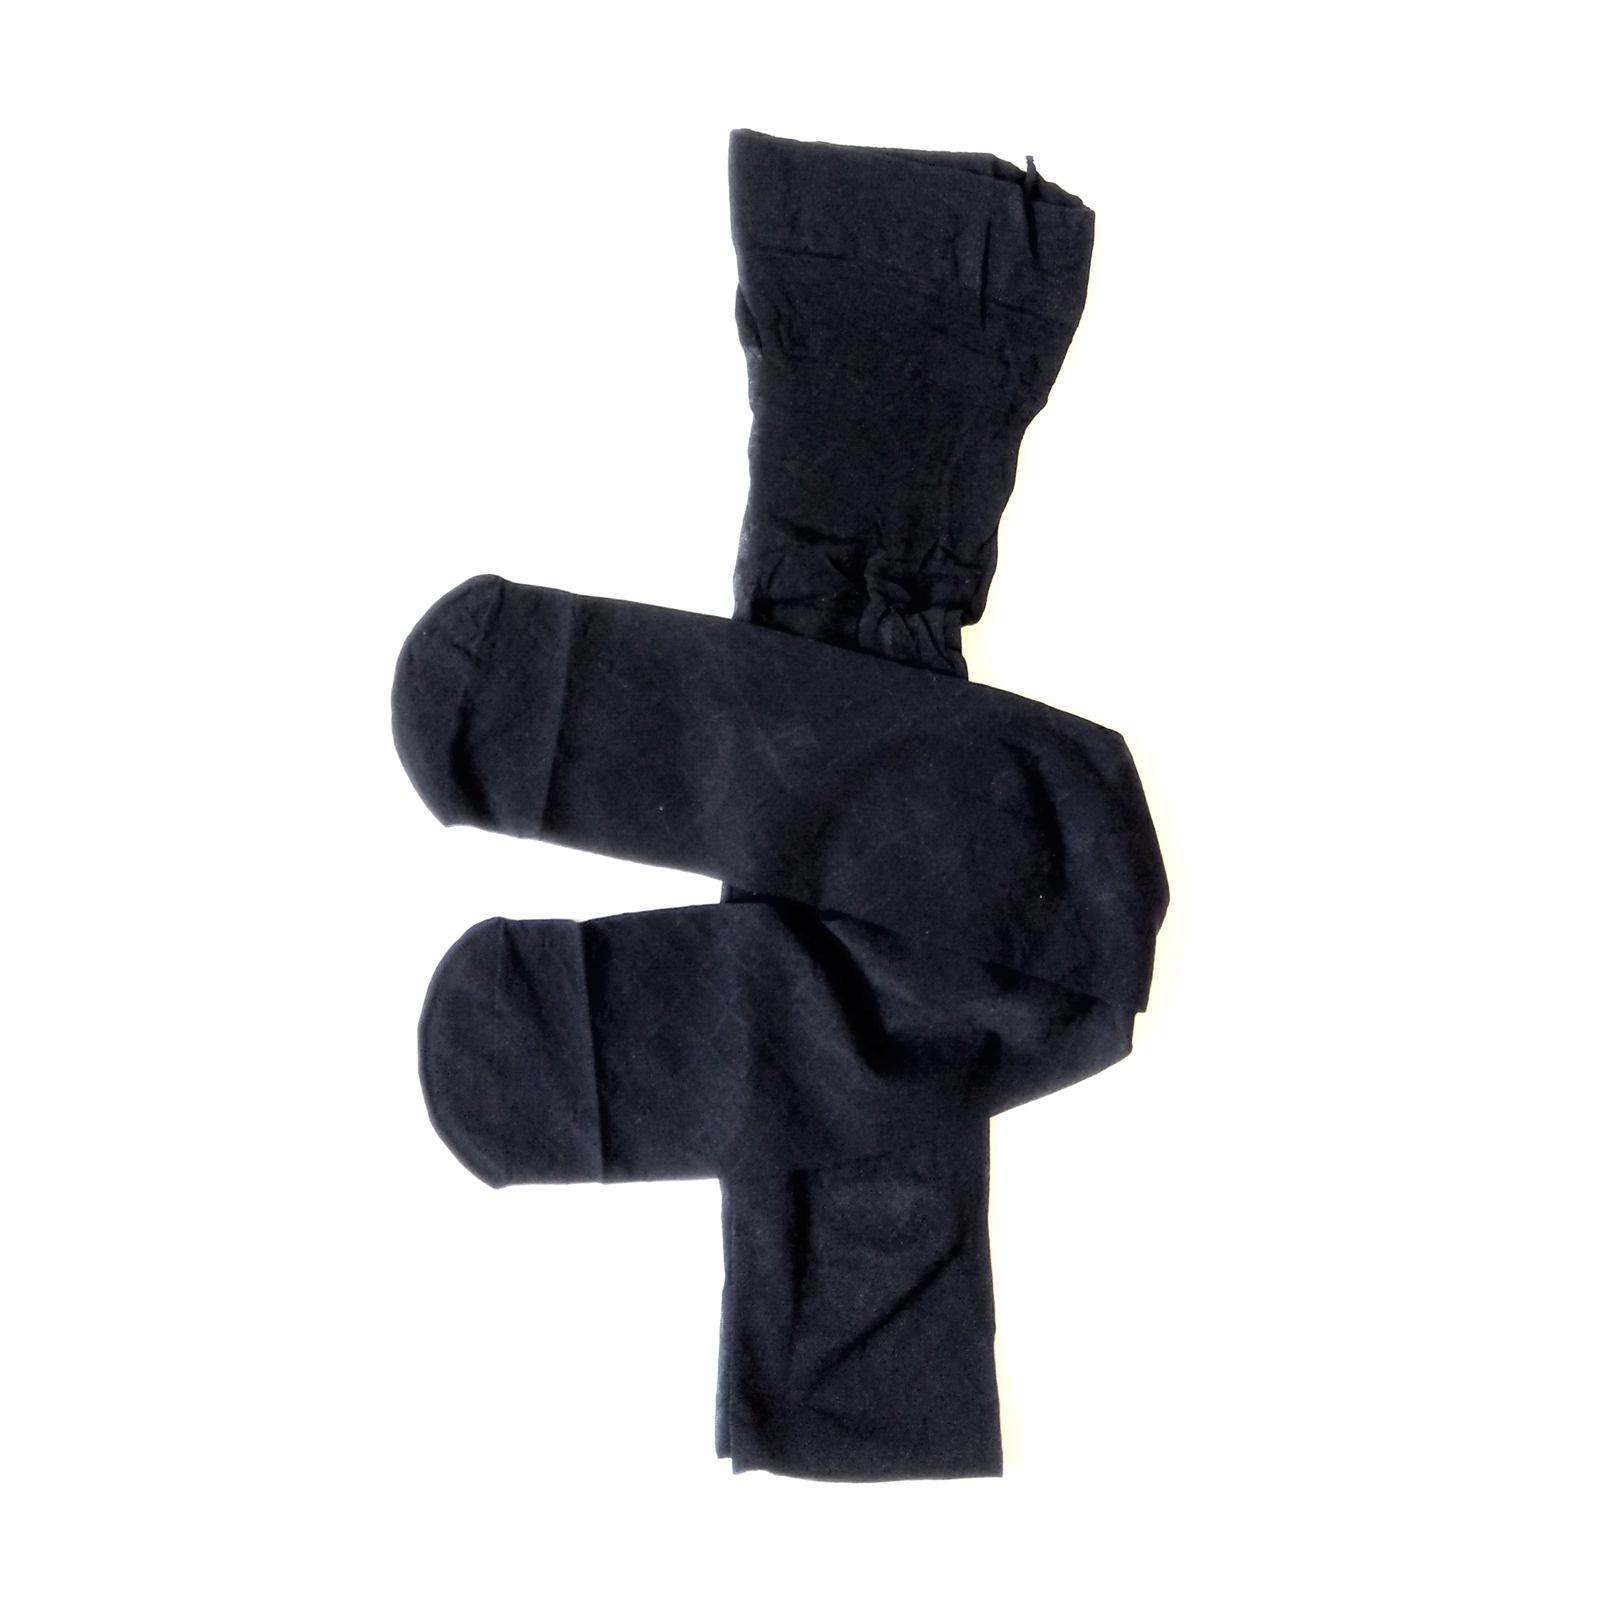 جوراب شلواری زنانه نوردای مدل 711553-SCH رنگ مشکی -  - 4